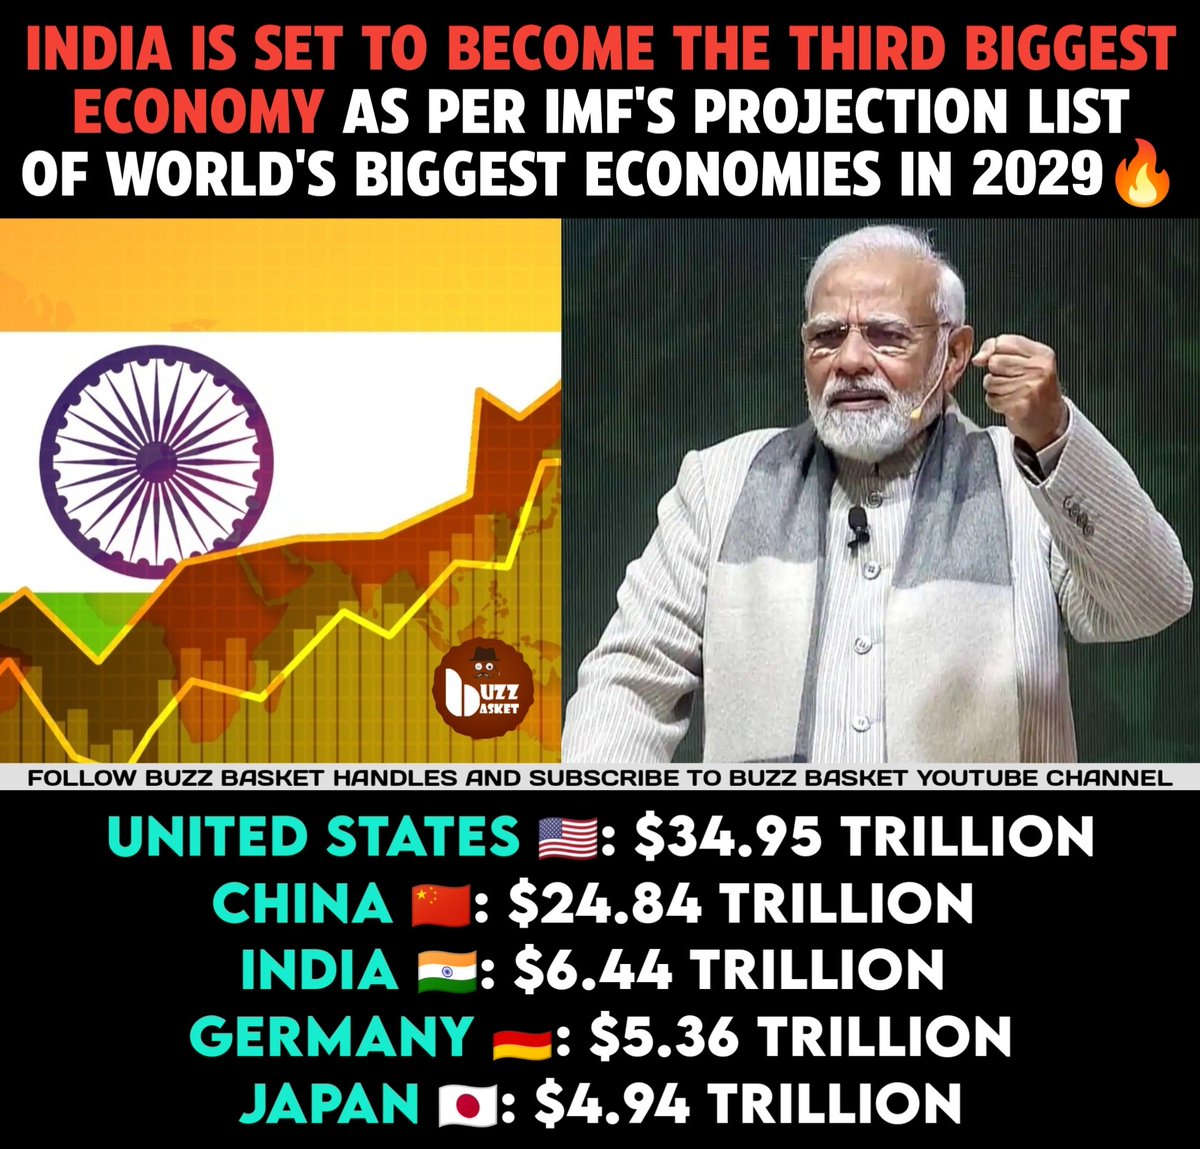 #India is set to become the third biggest economy in the next 3 years. 

#NarendraModi #Modi #IndianEconomy #USA #China #Germany #Japan